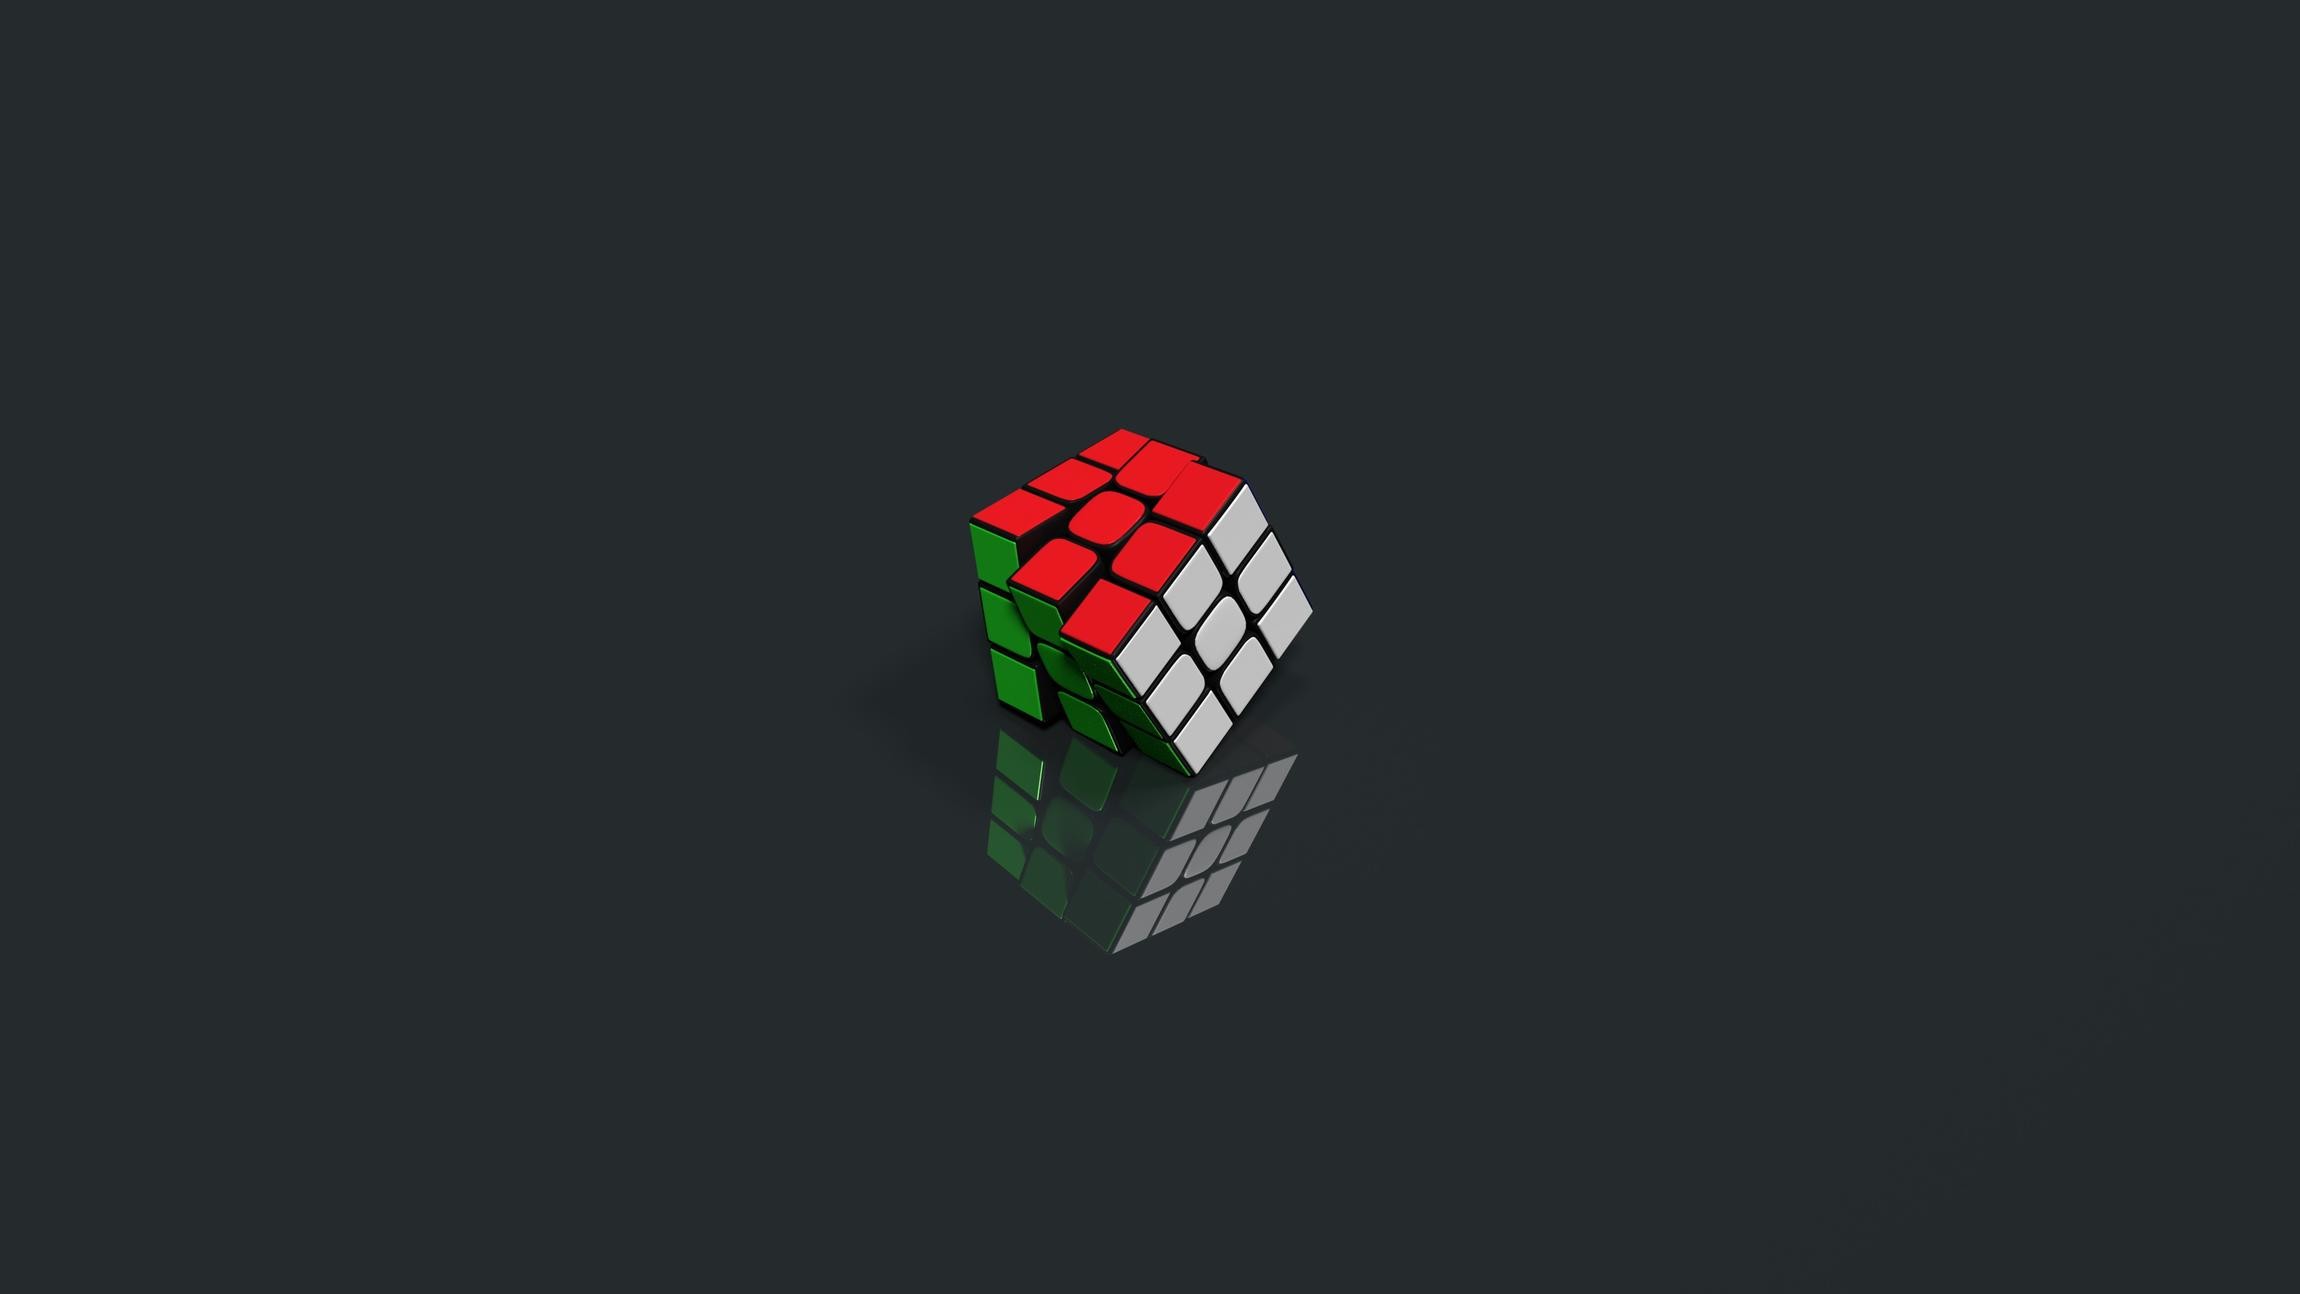 Rubiks Cube Background Image All White